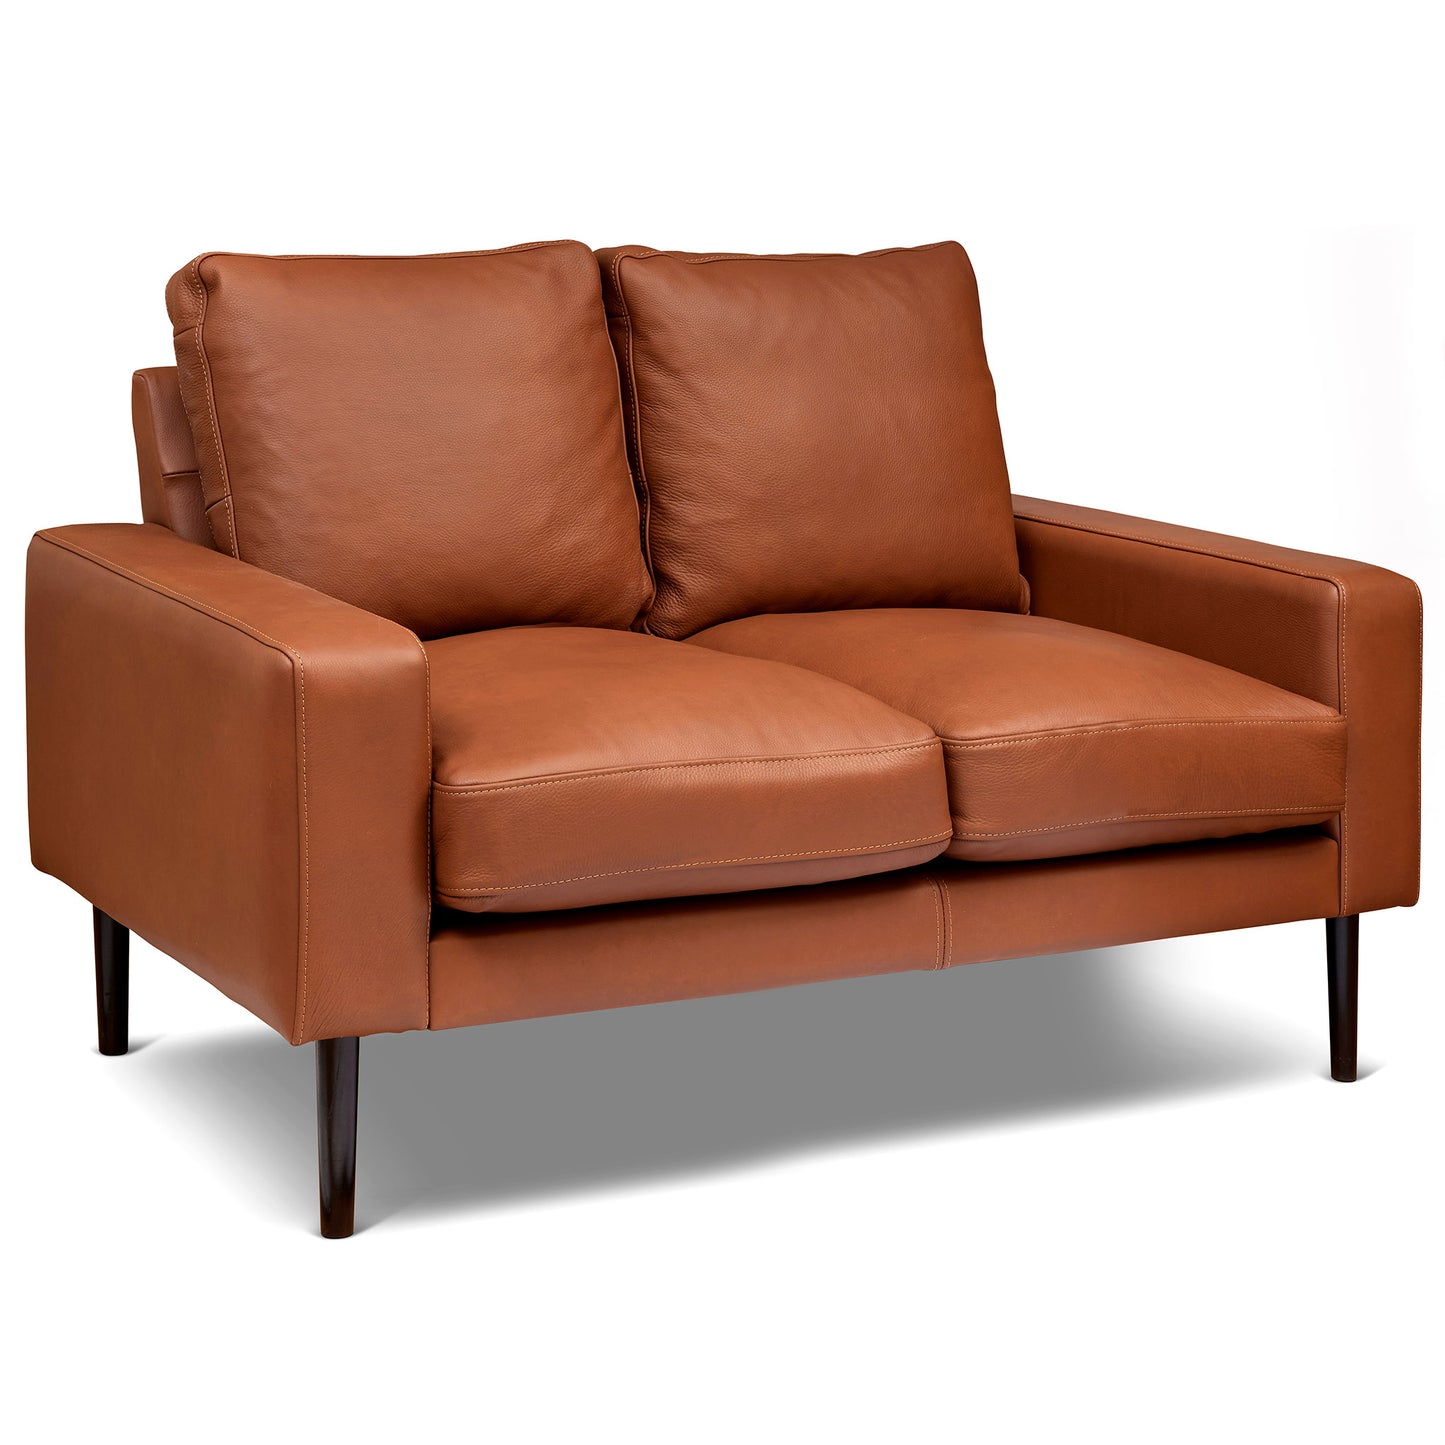 Liten mini soffa i brunt äkta skinn, 142 cm bred